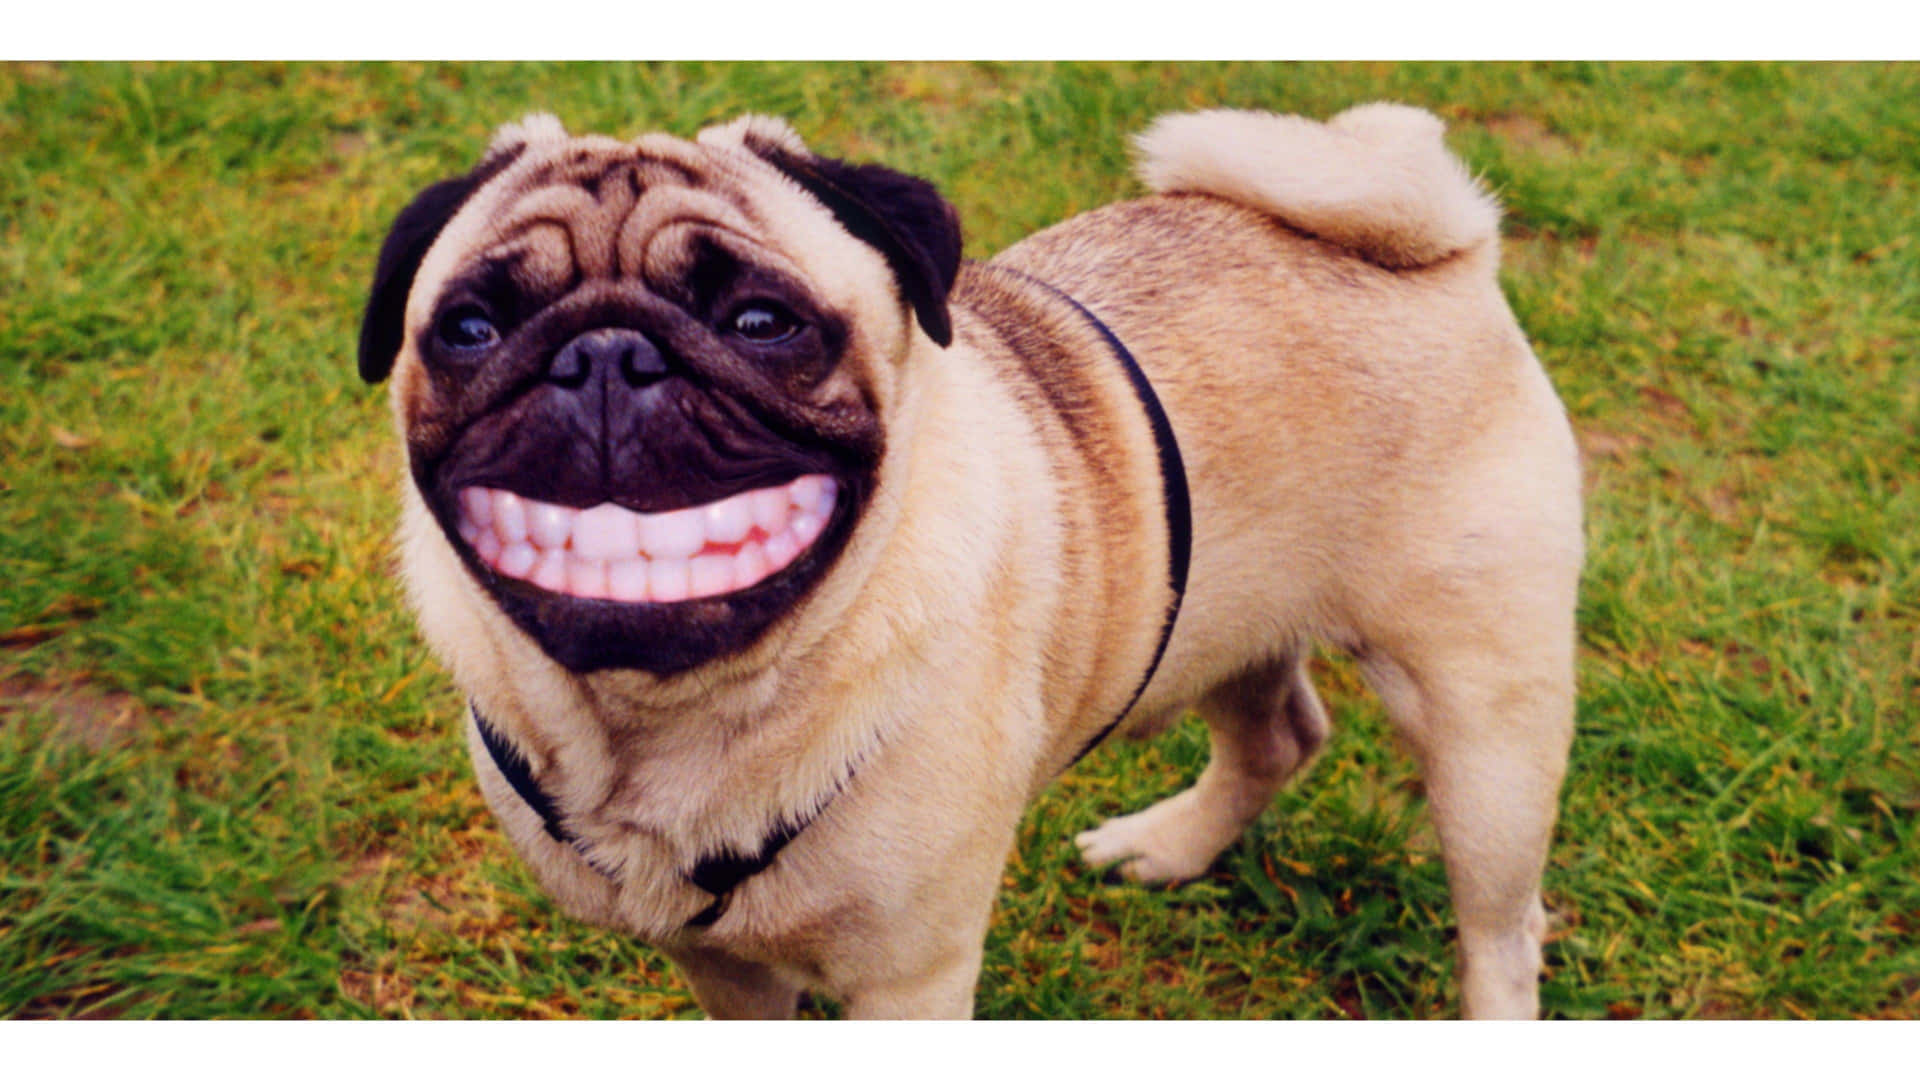 A Pug Dog With A Fake Smile